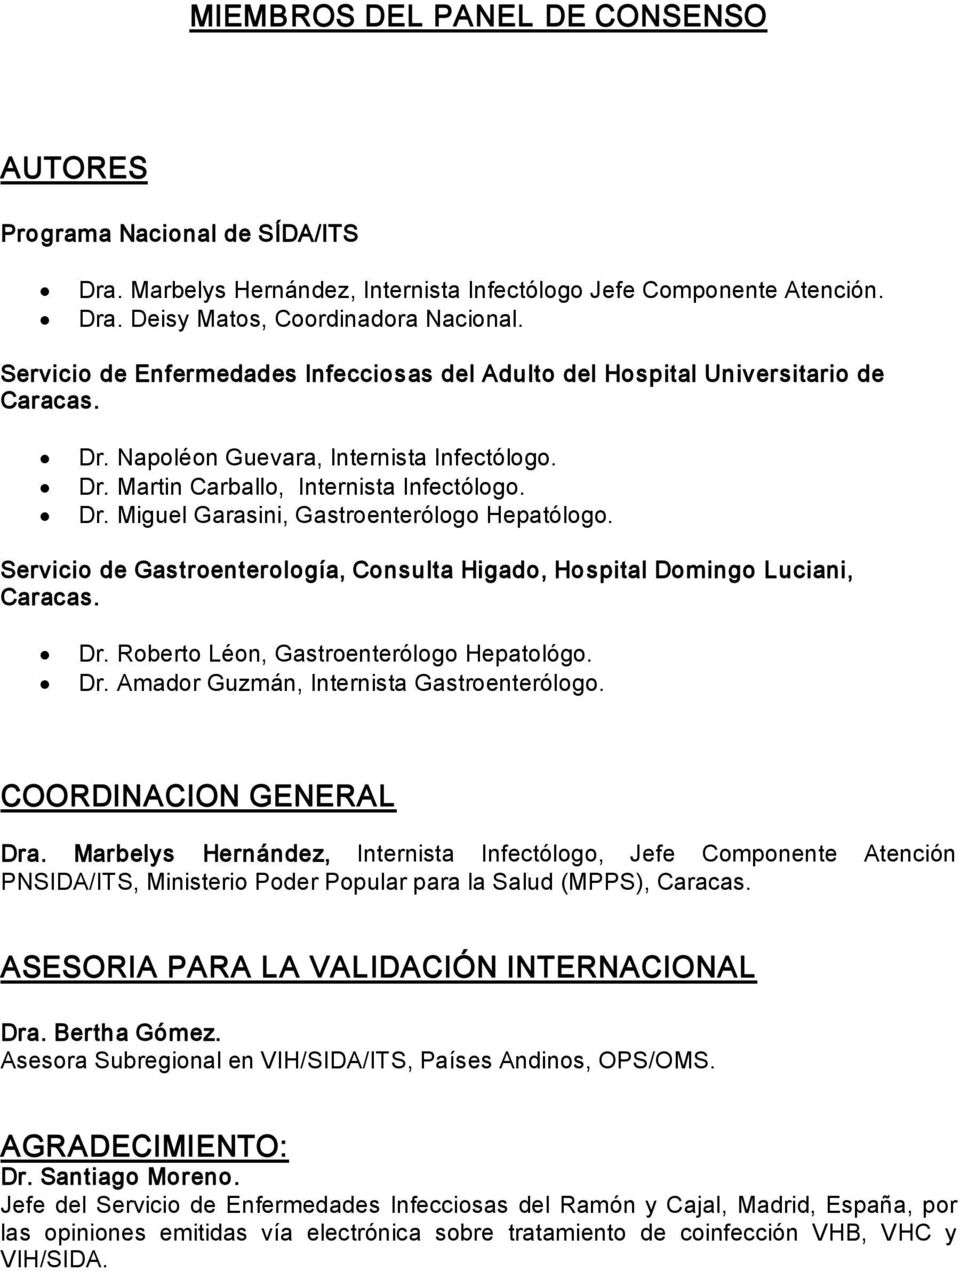 Servicio de Gastroenterología, Consulta Higado, Hospital Domingo Luciani, Caracas. Dr. Roberto Léon, Gastroenterólogo Hepatológo. Dr. Amador Guzmán, Internista Gastroenterólogo.